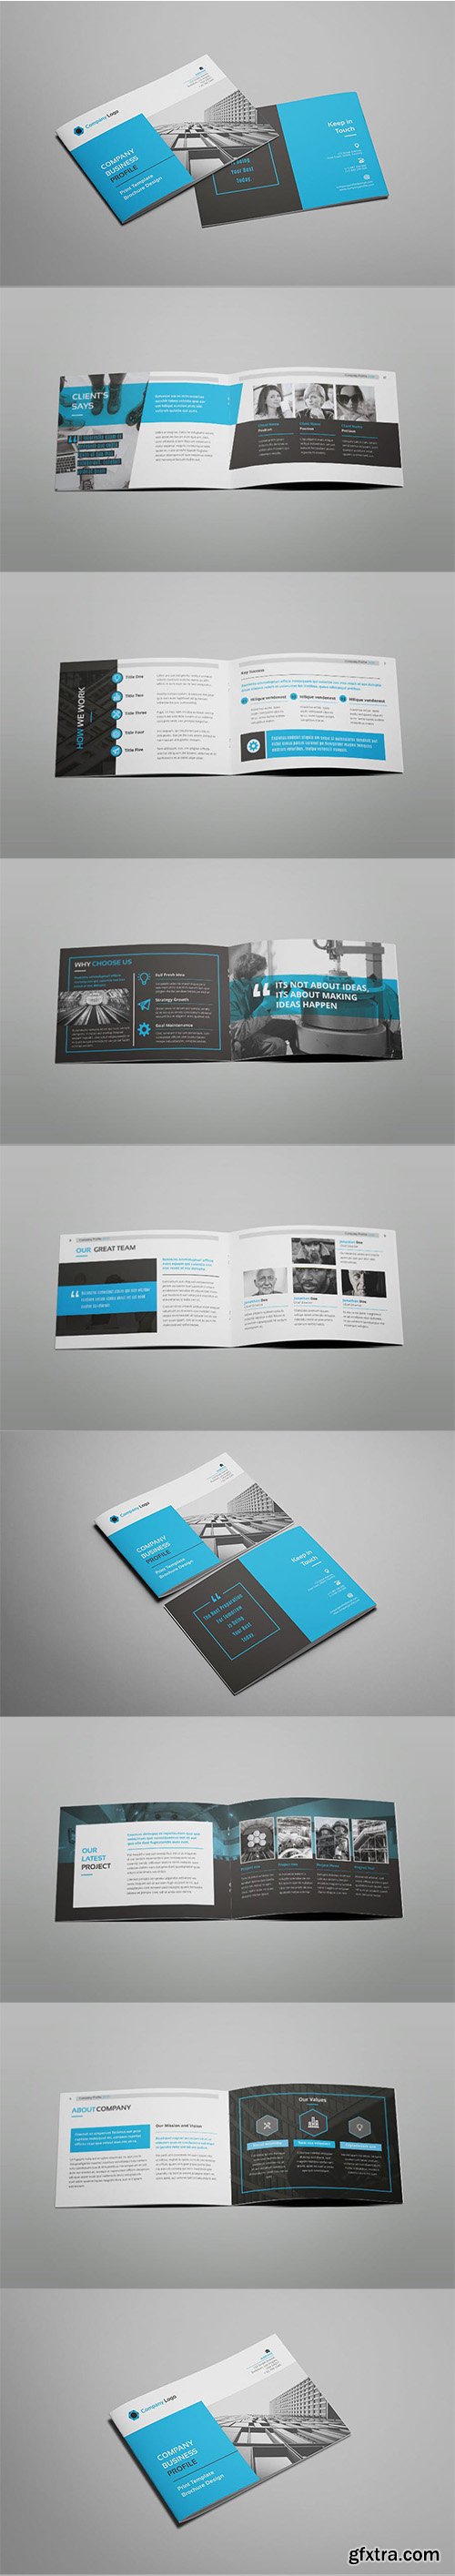 HILIH - A5 Company Profile Brochure